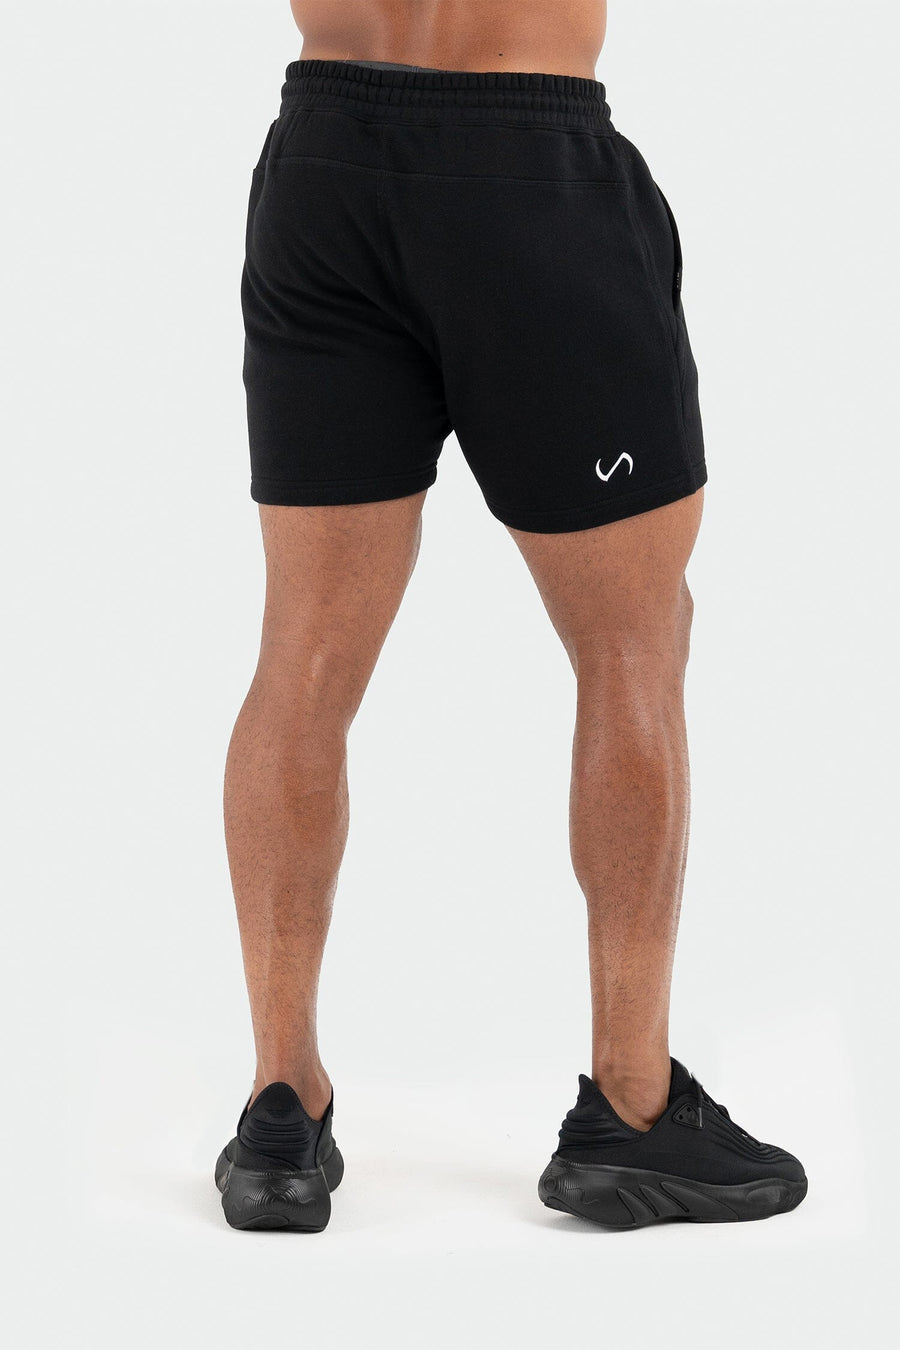 TLF Pivotal 6" Fleece Shorts – Men’s Gym Shorts - 6 Inch Inseam Men's Shorts - Black - 4